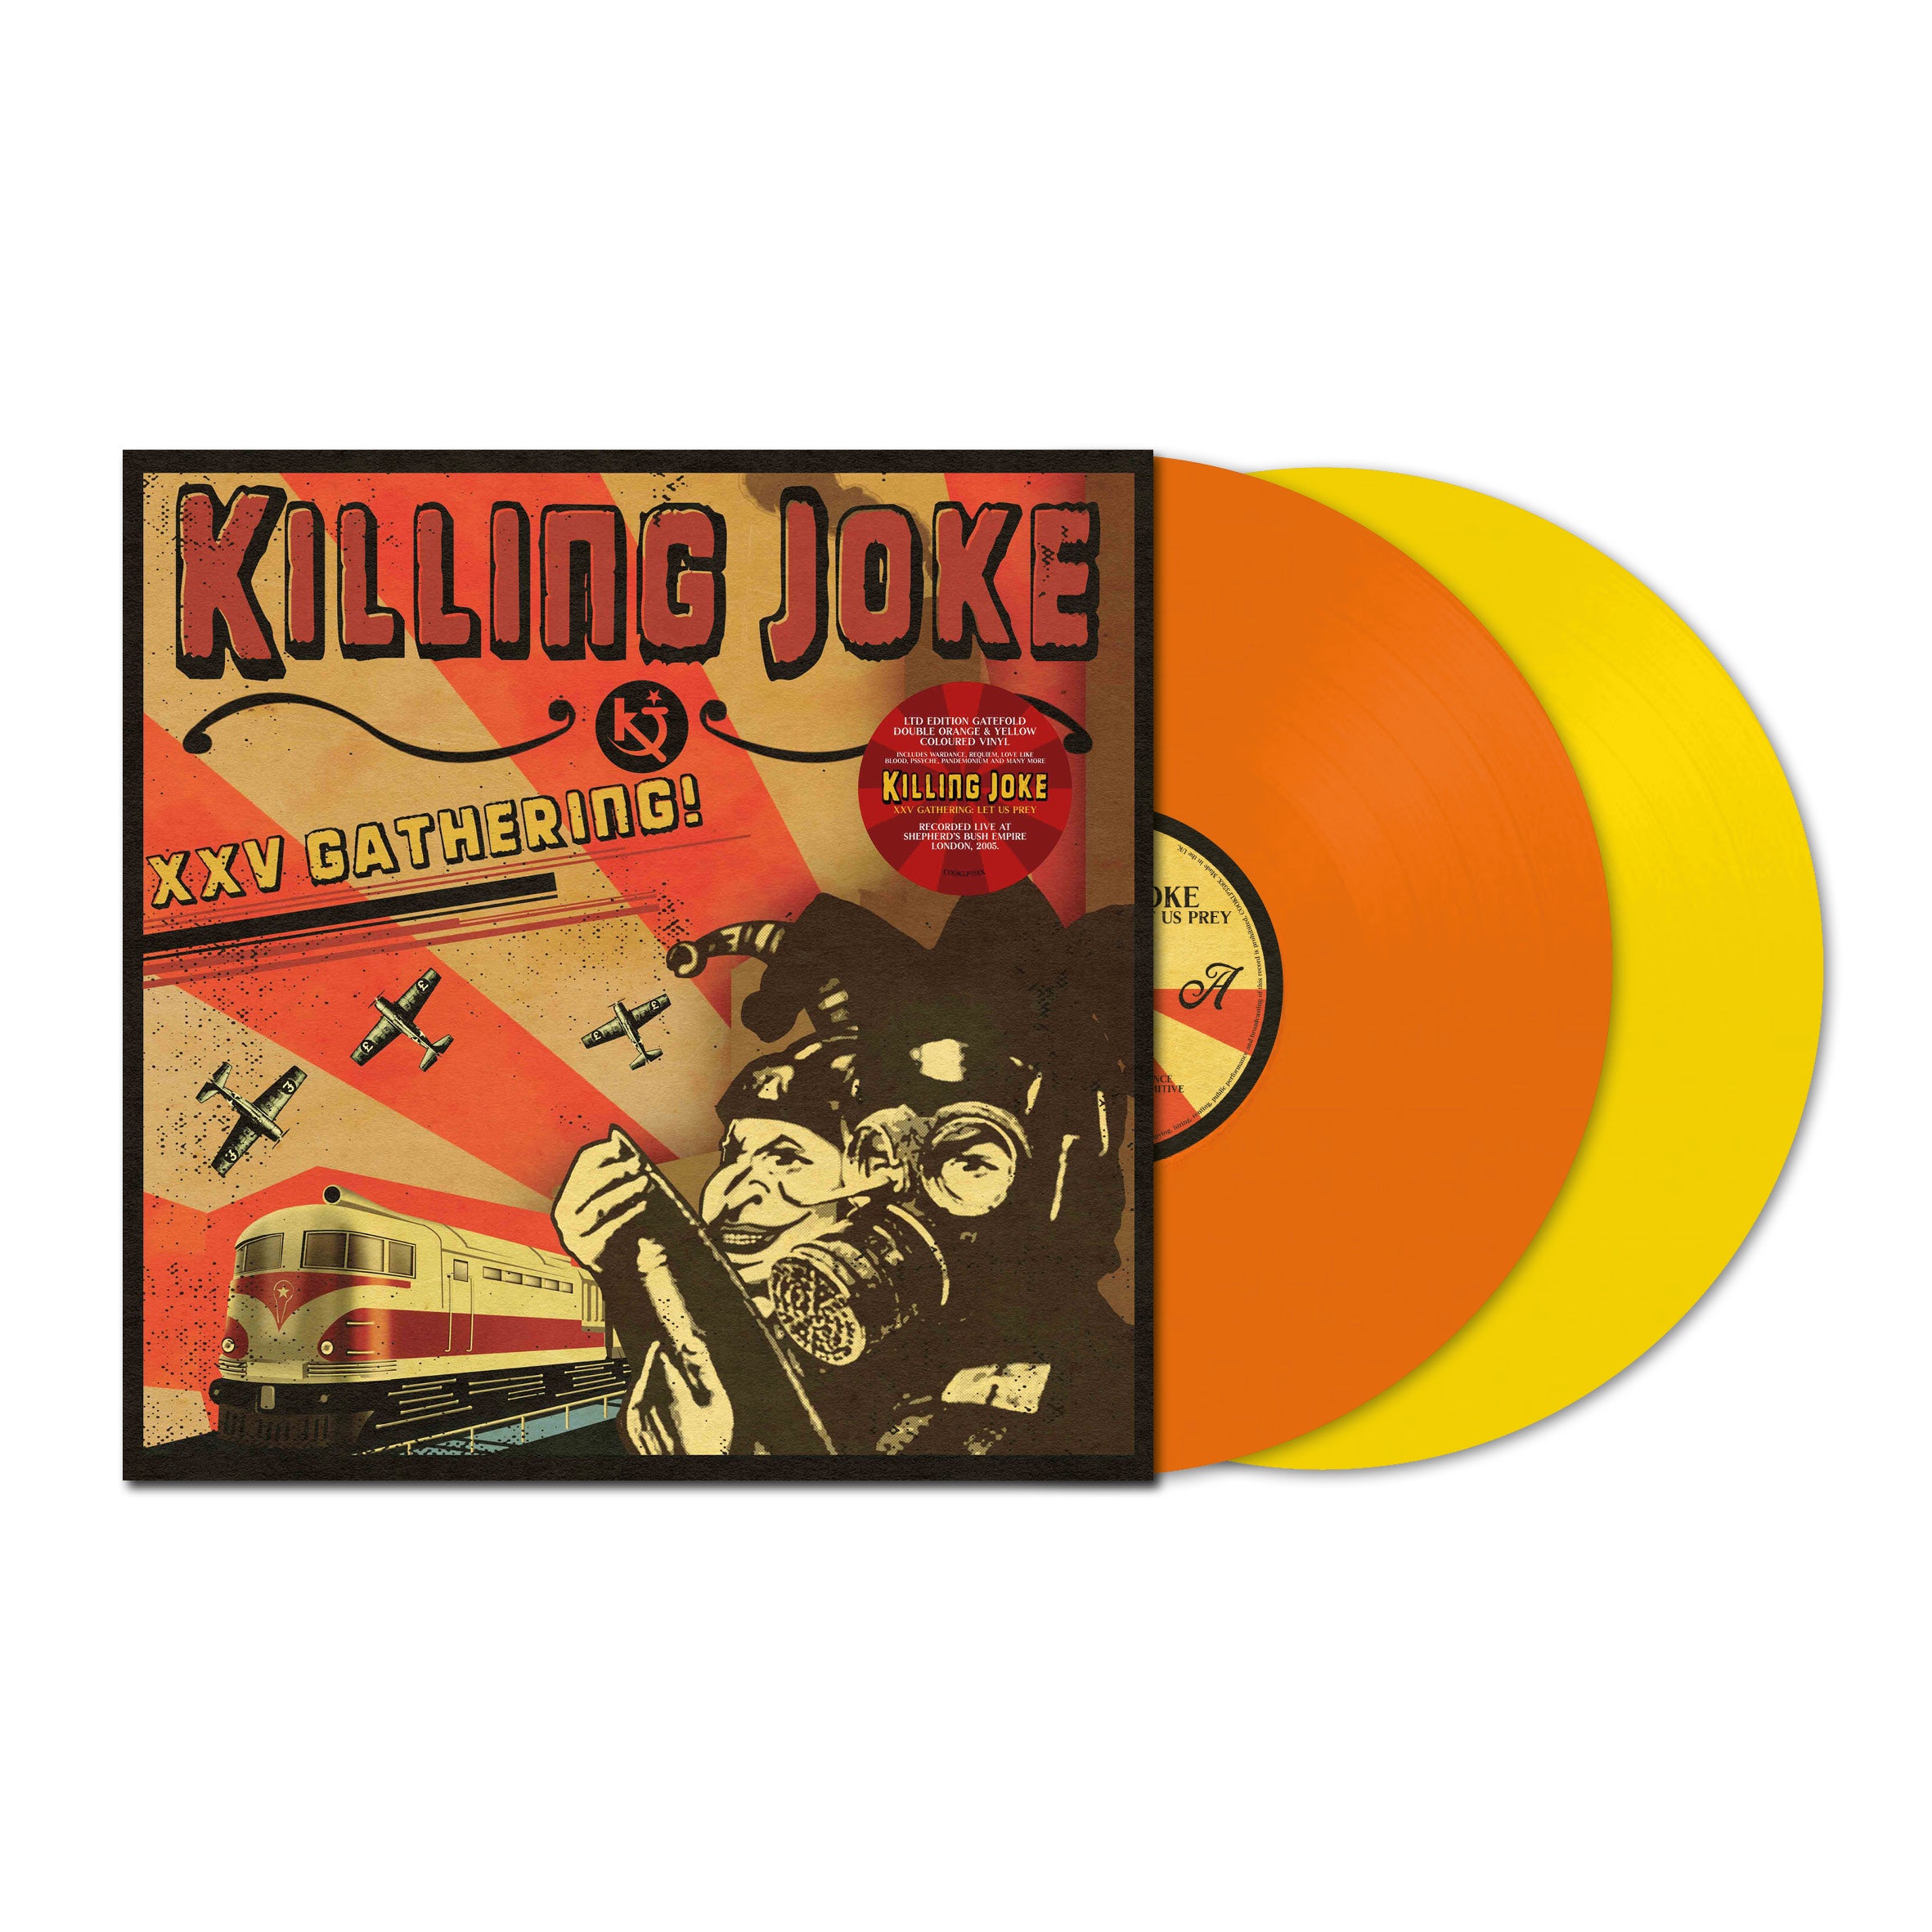 Killing Joke - XXV Gathering - Let Us Prey: Limited Edition Orange + Yellow Vinyl 2LP